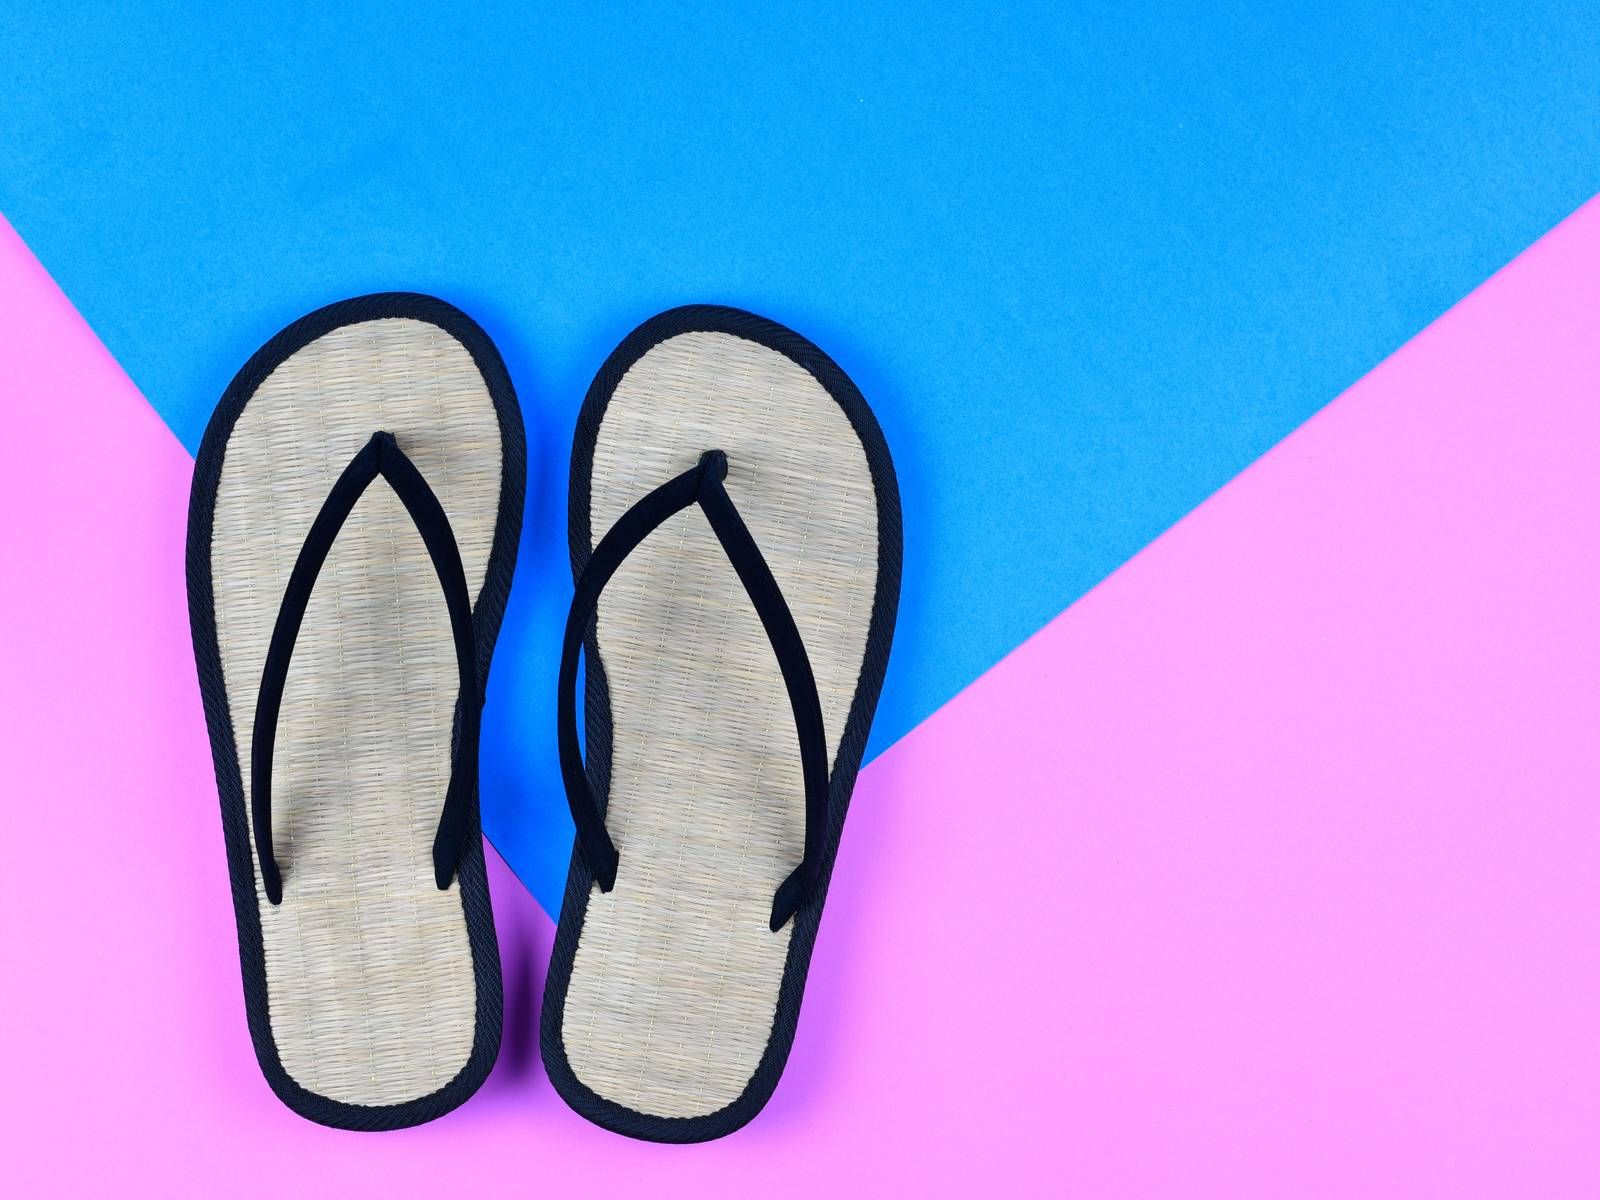 A summer wearing flip-flops can make your skin tougher.